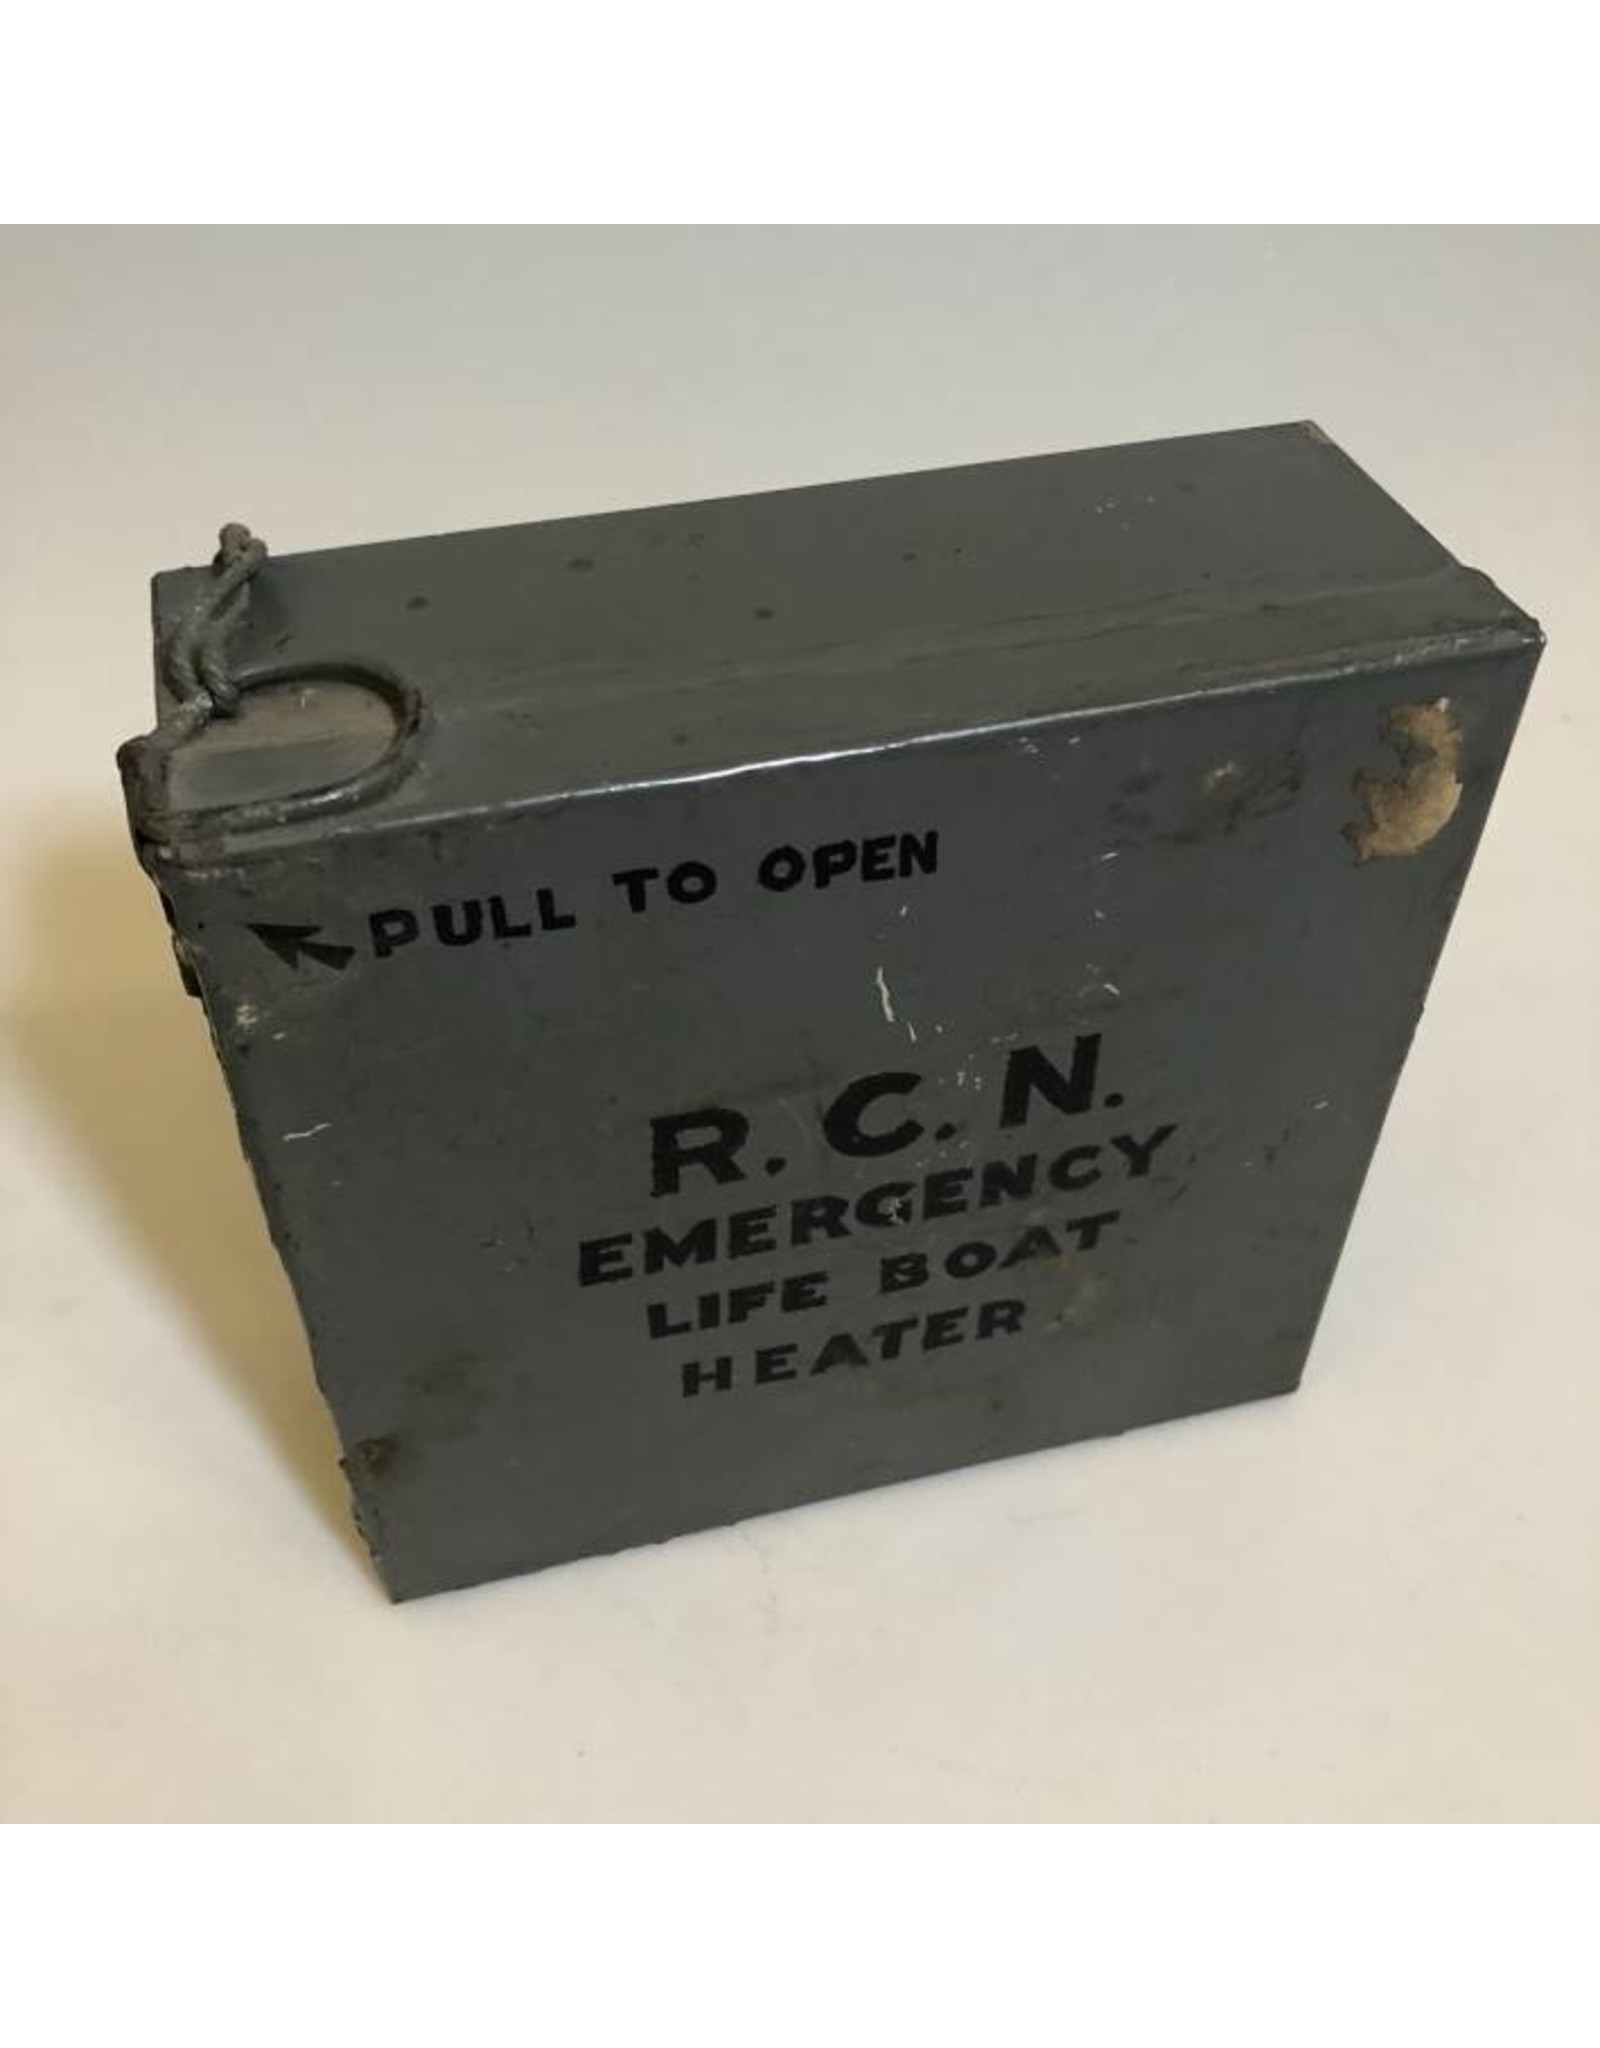 Royal Canadian Navy emergency life boat heater unopened